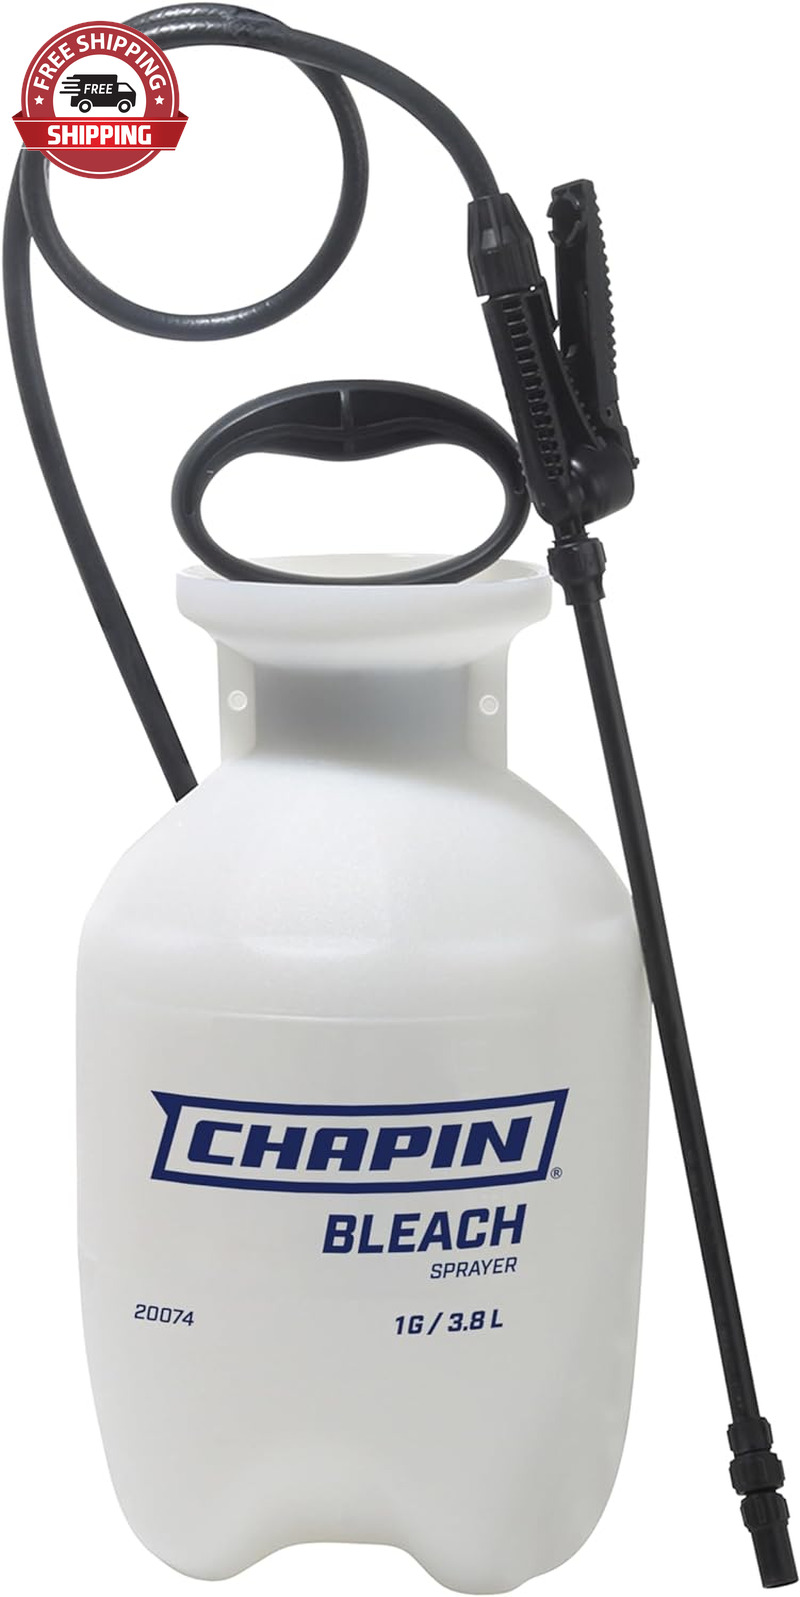 Chapin International Chapin 20074 1-Gallon Bleach Sprayer, Bonus Spray Shield, T